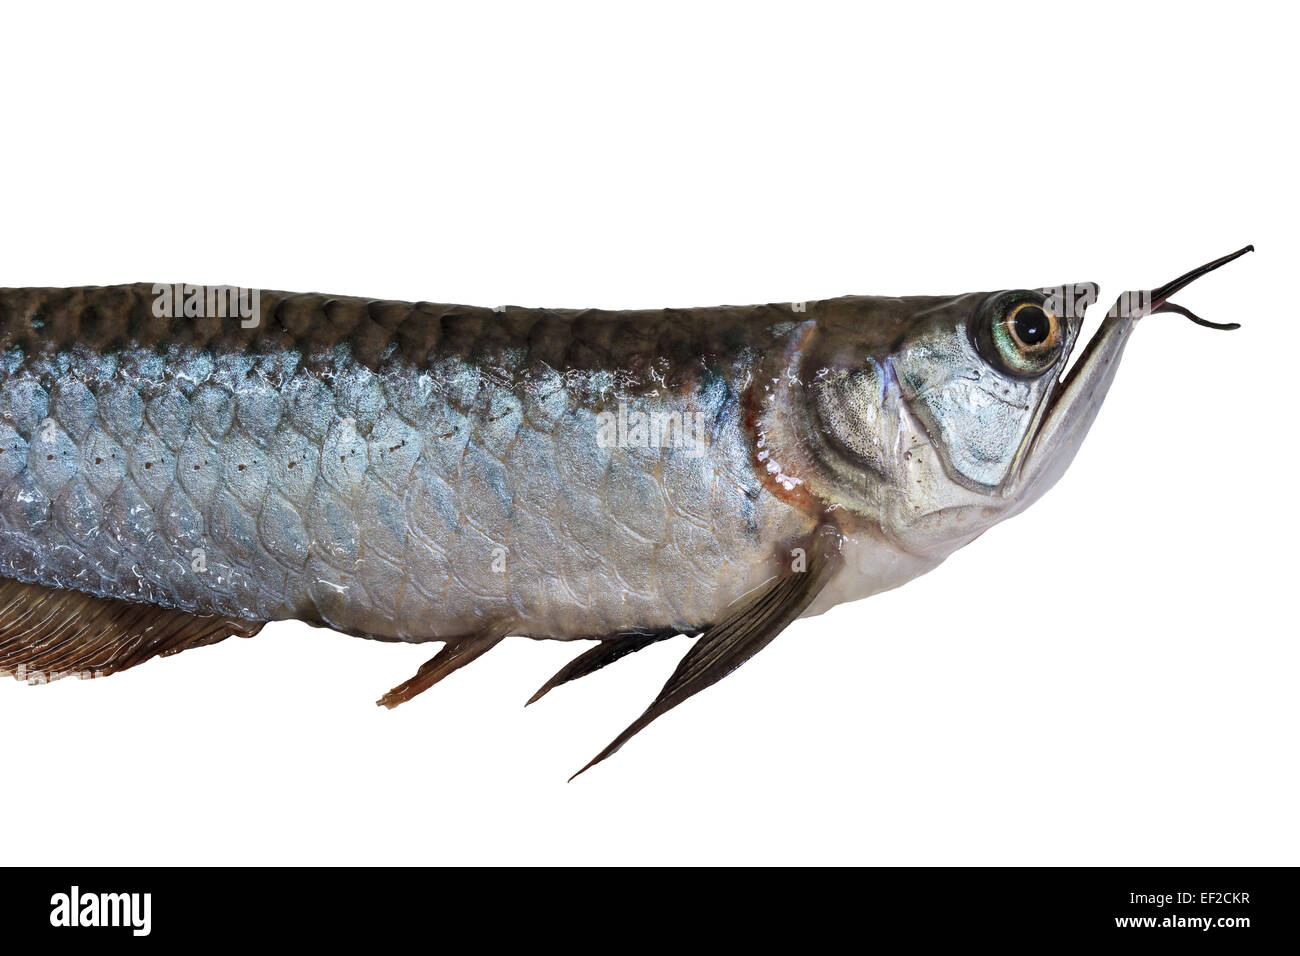 Arowana fish (Osteoglossum biccirhosum) isolated on white background Stock Photo